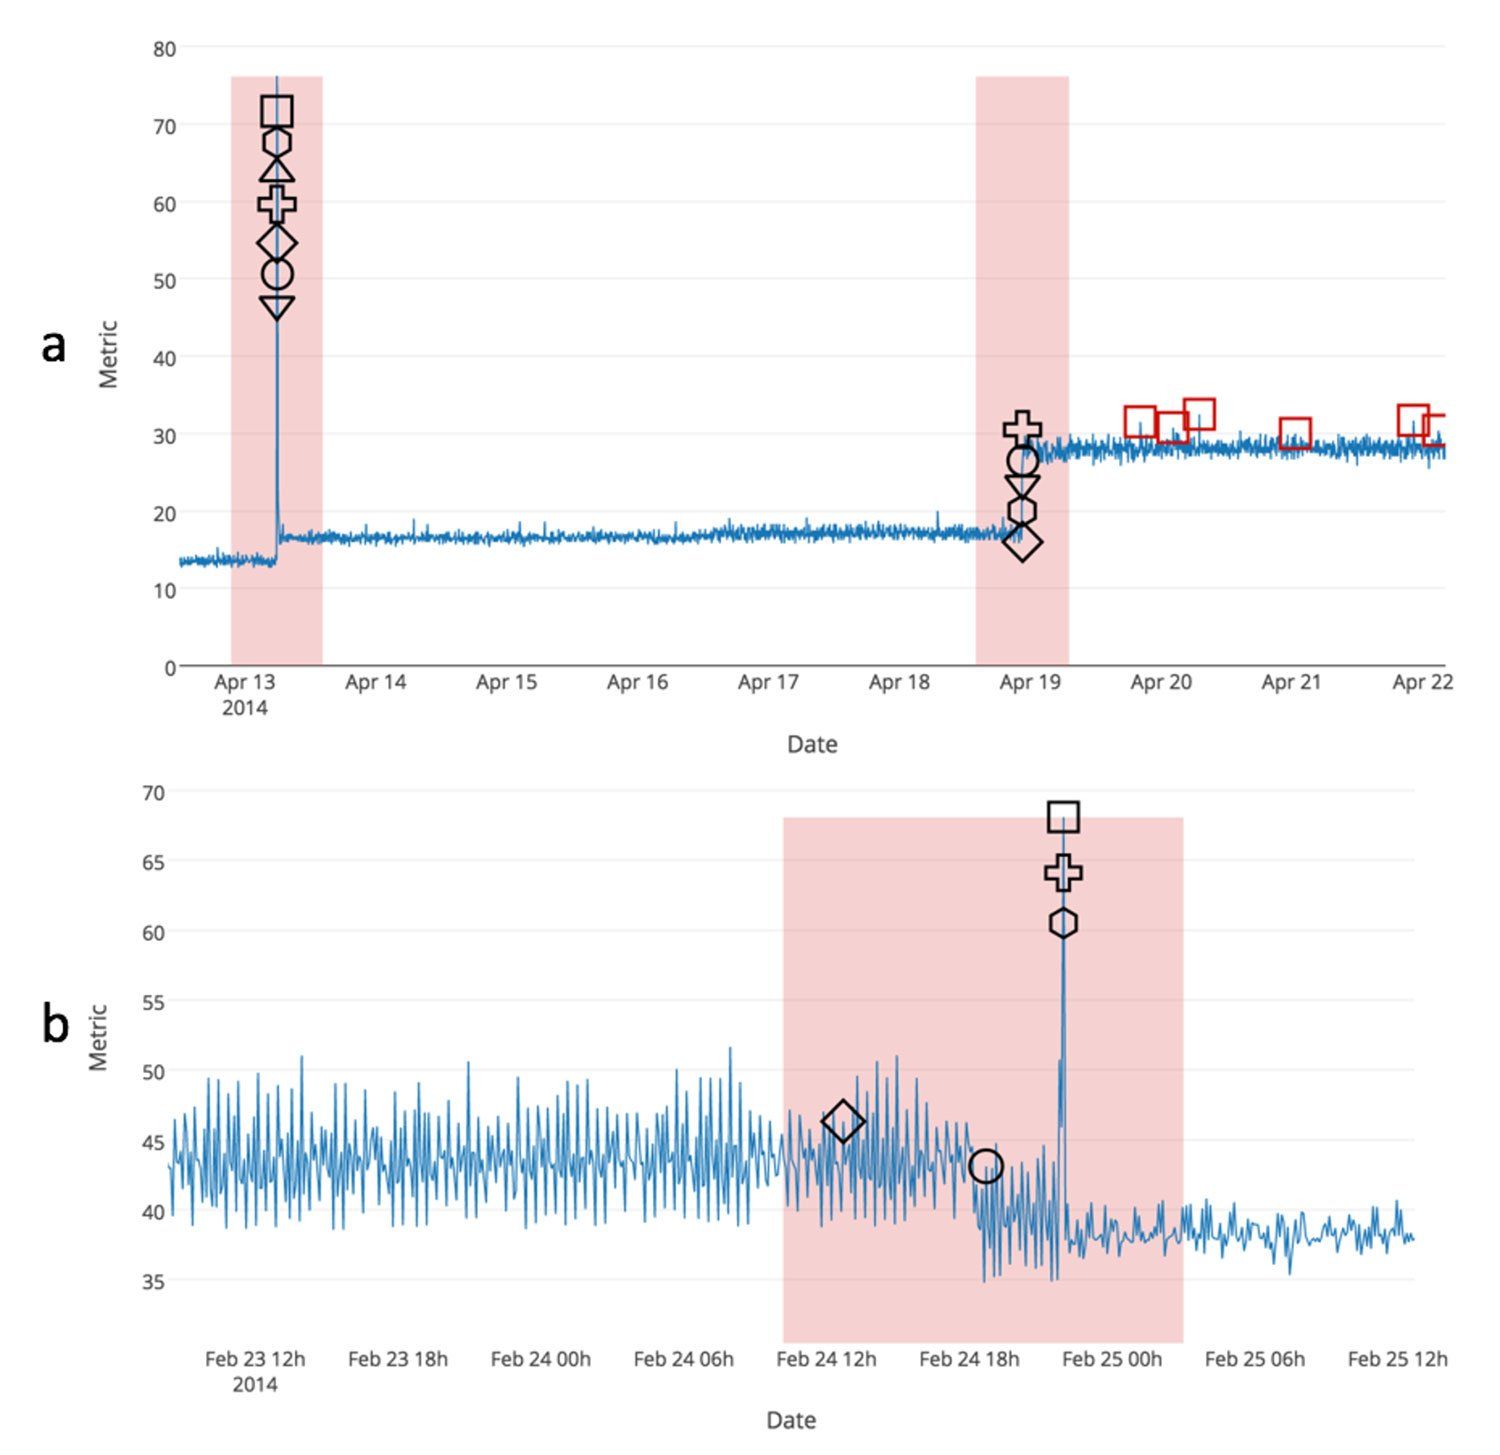 Detector Results in Sample Data Streams